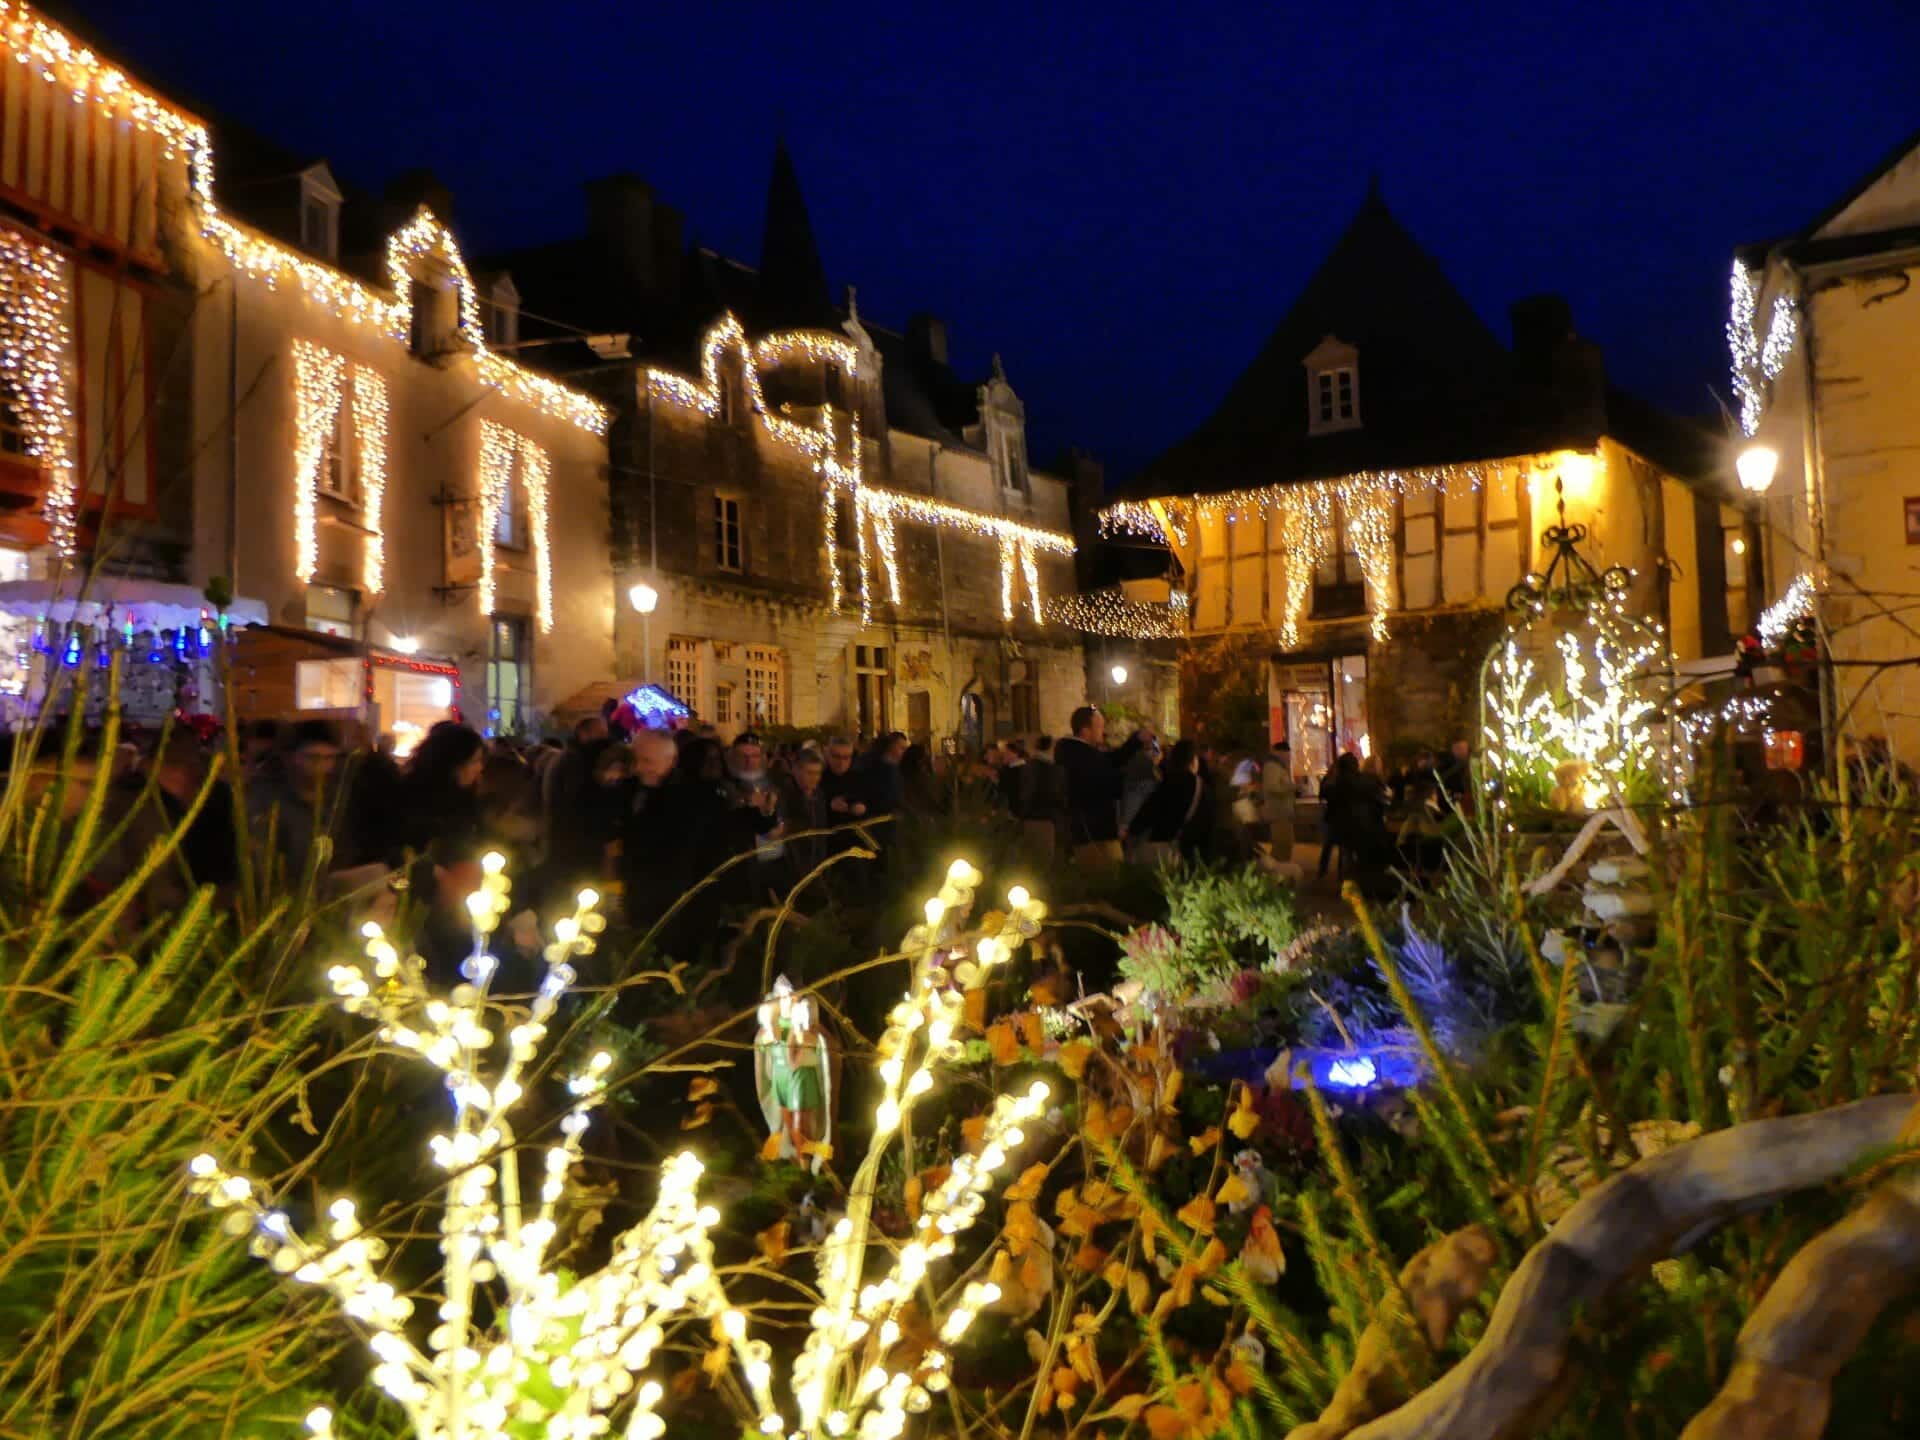 Illuminations de Noël à Rochefort-en-Terre dans le Morbihan en Bretagne